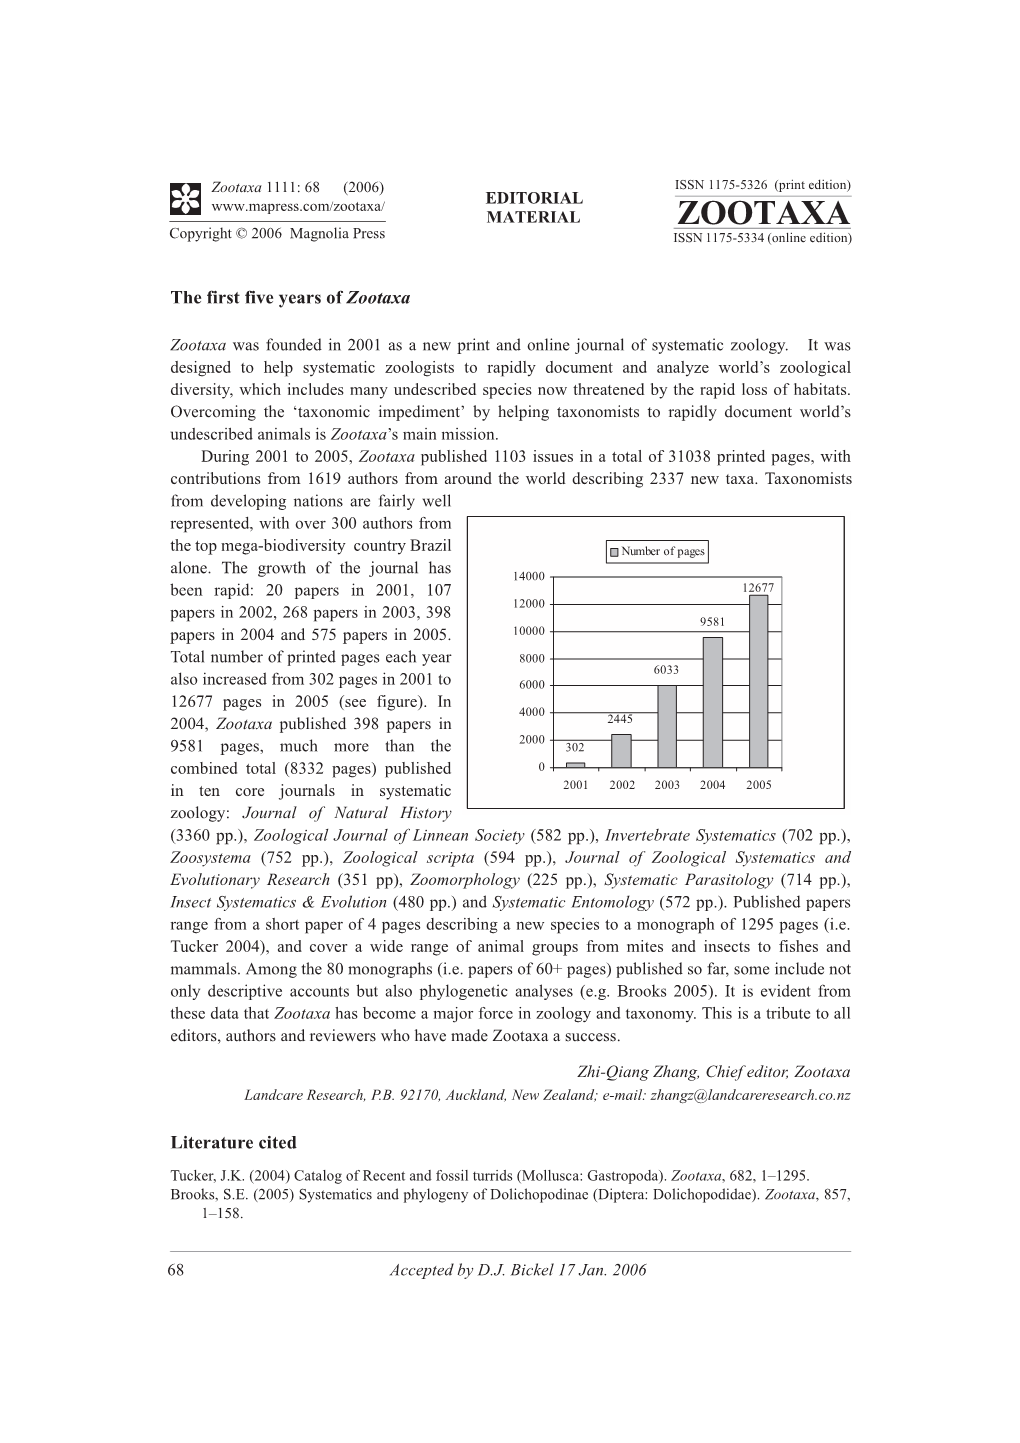 Zootaxa, 2001-2005, Bibliometry, Core Journal in Systematics